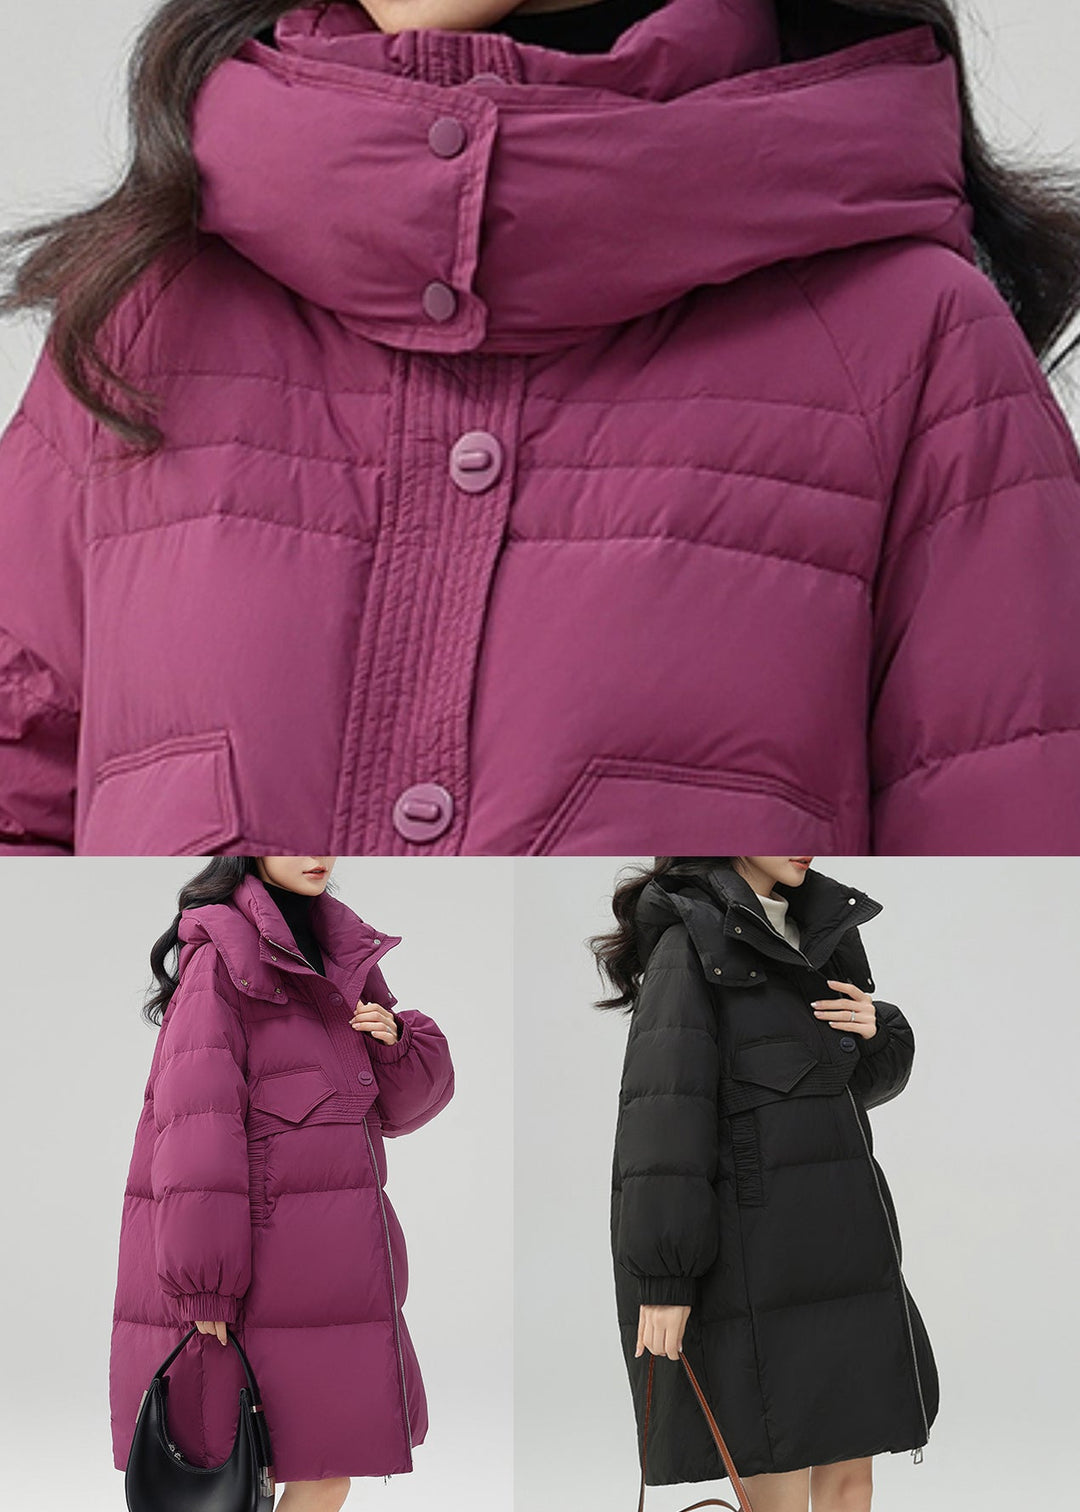 Plus Size Black Zippered Pockets Patchwork Duck Down Coat Winter